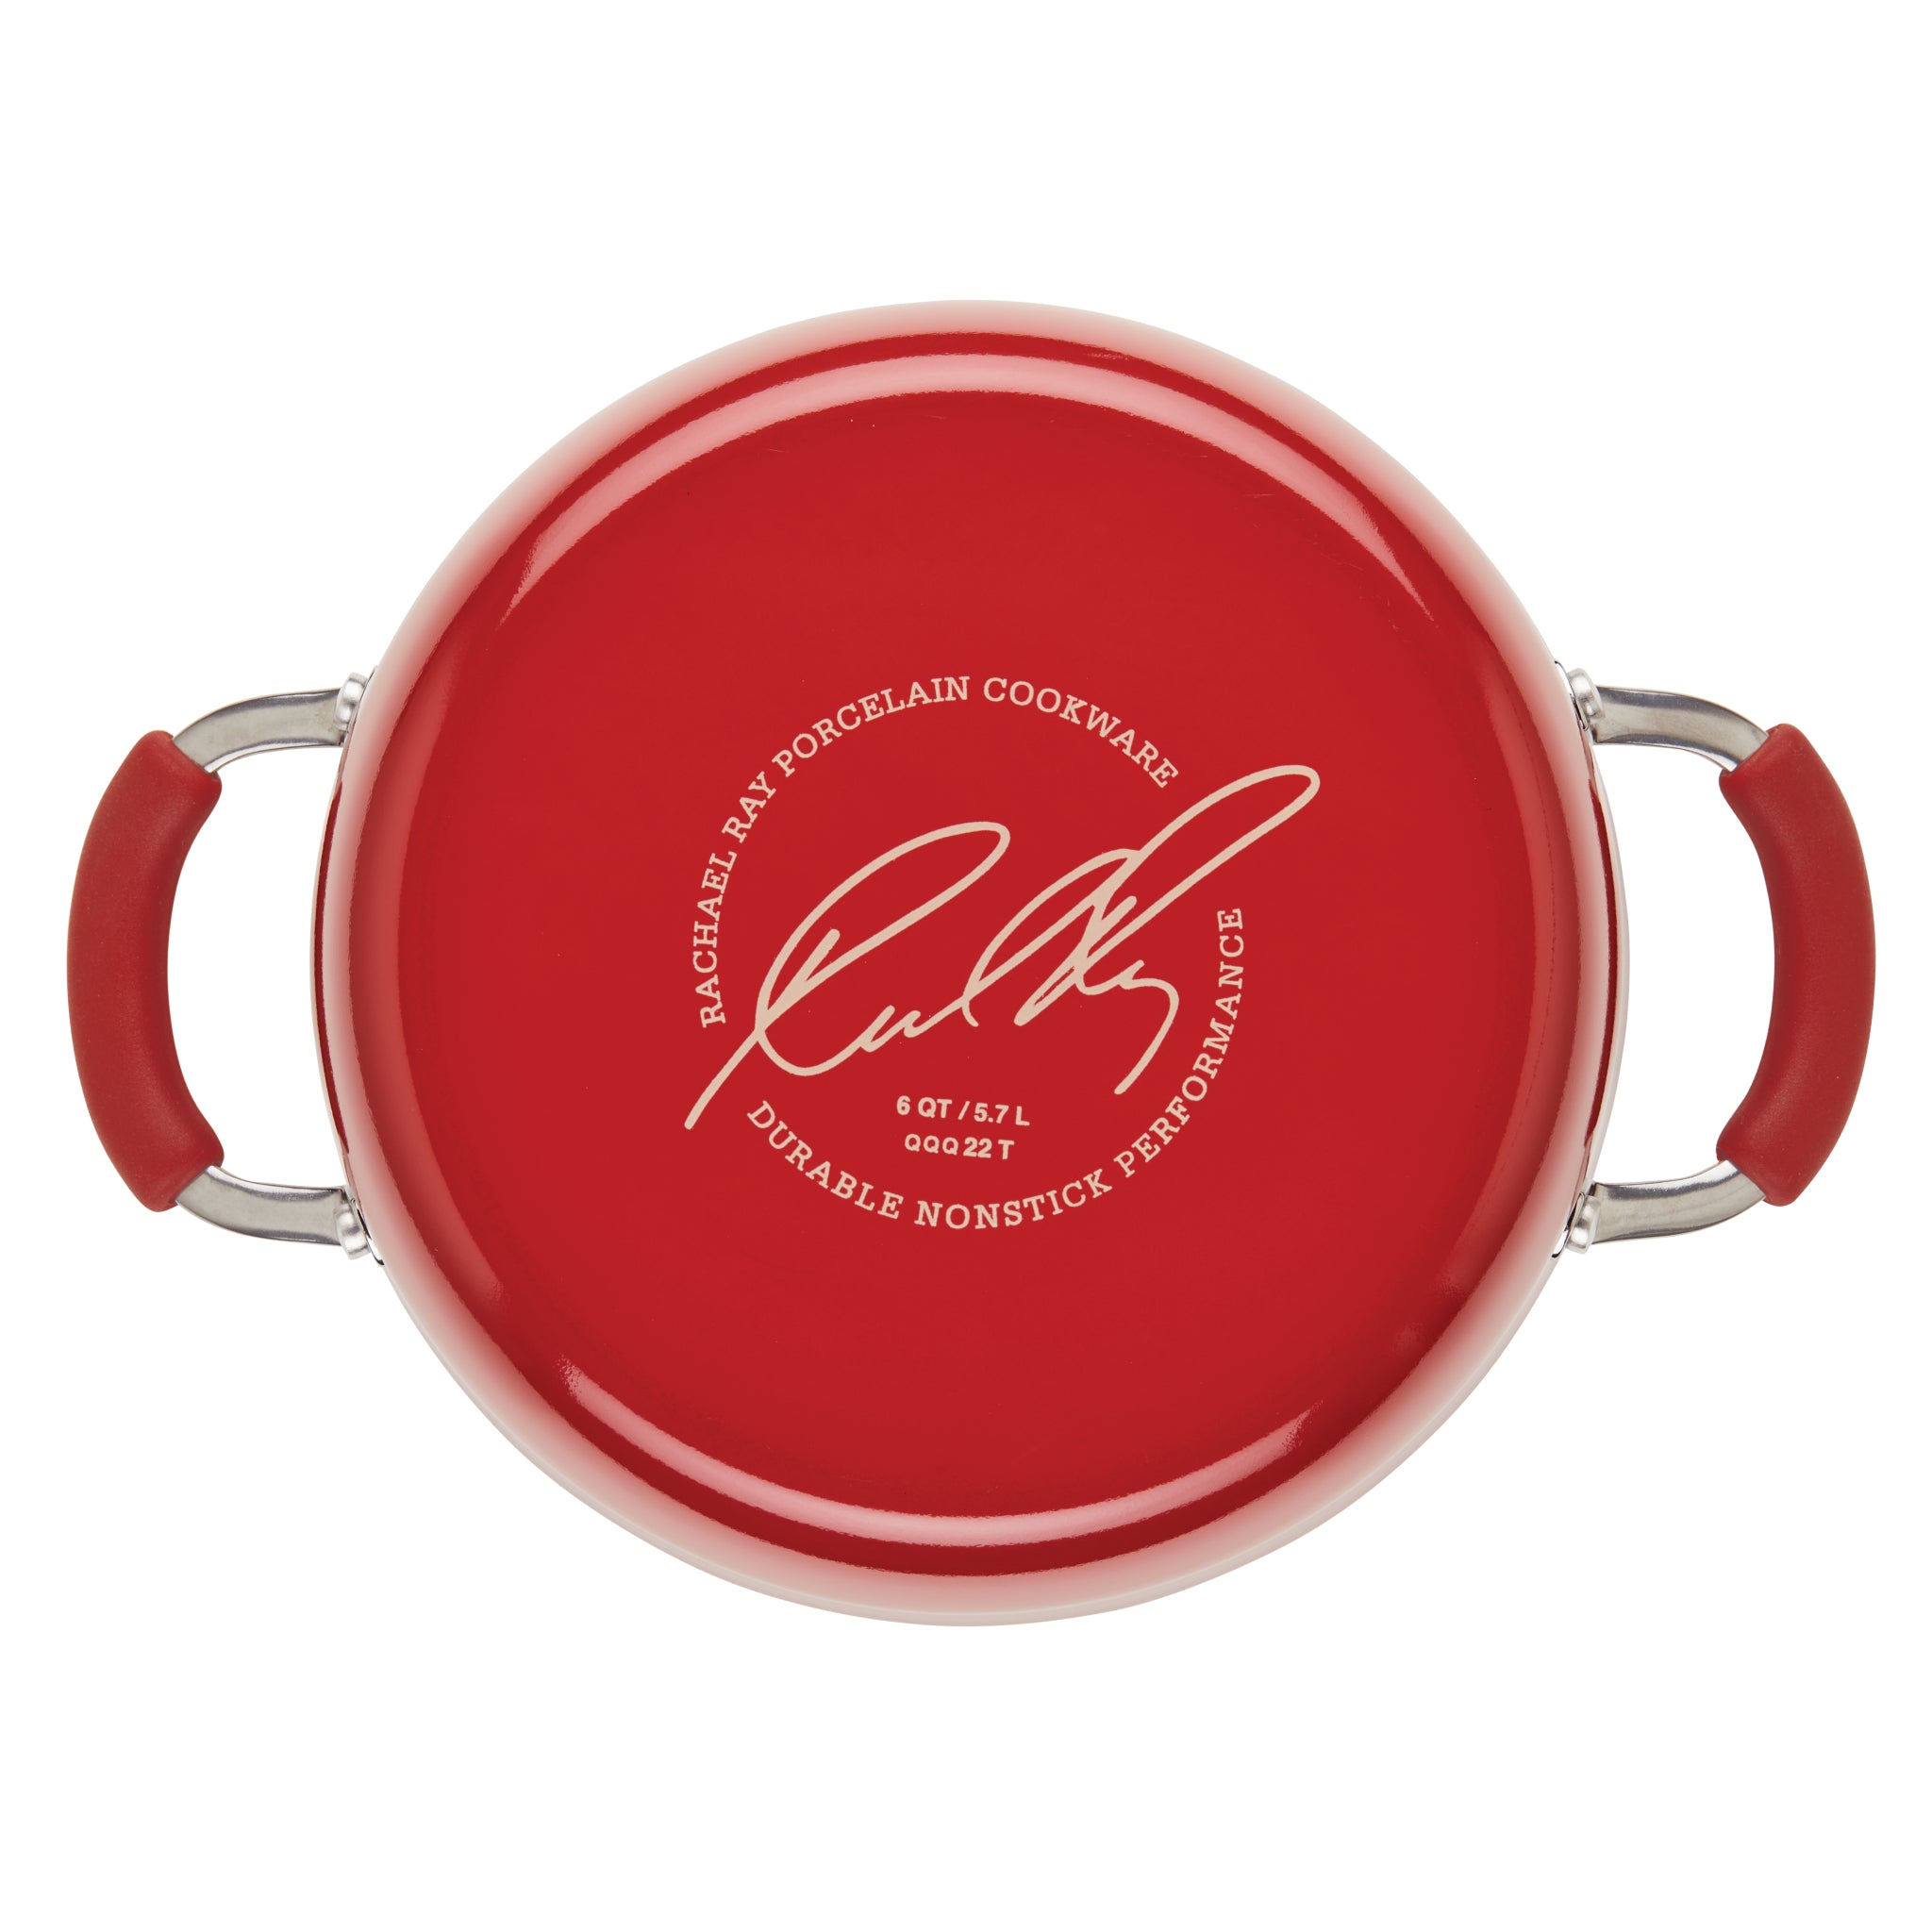 Rachael Ray Cucina 10-pc. Nonstick Bakeware Set, Brown/Red